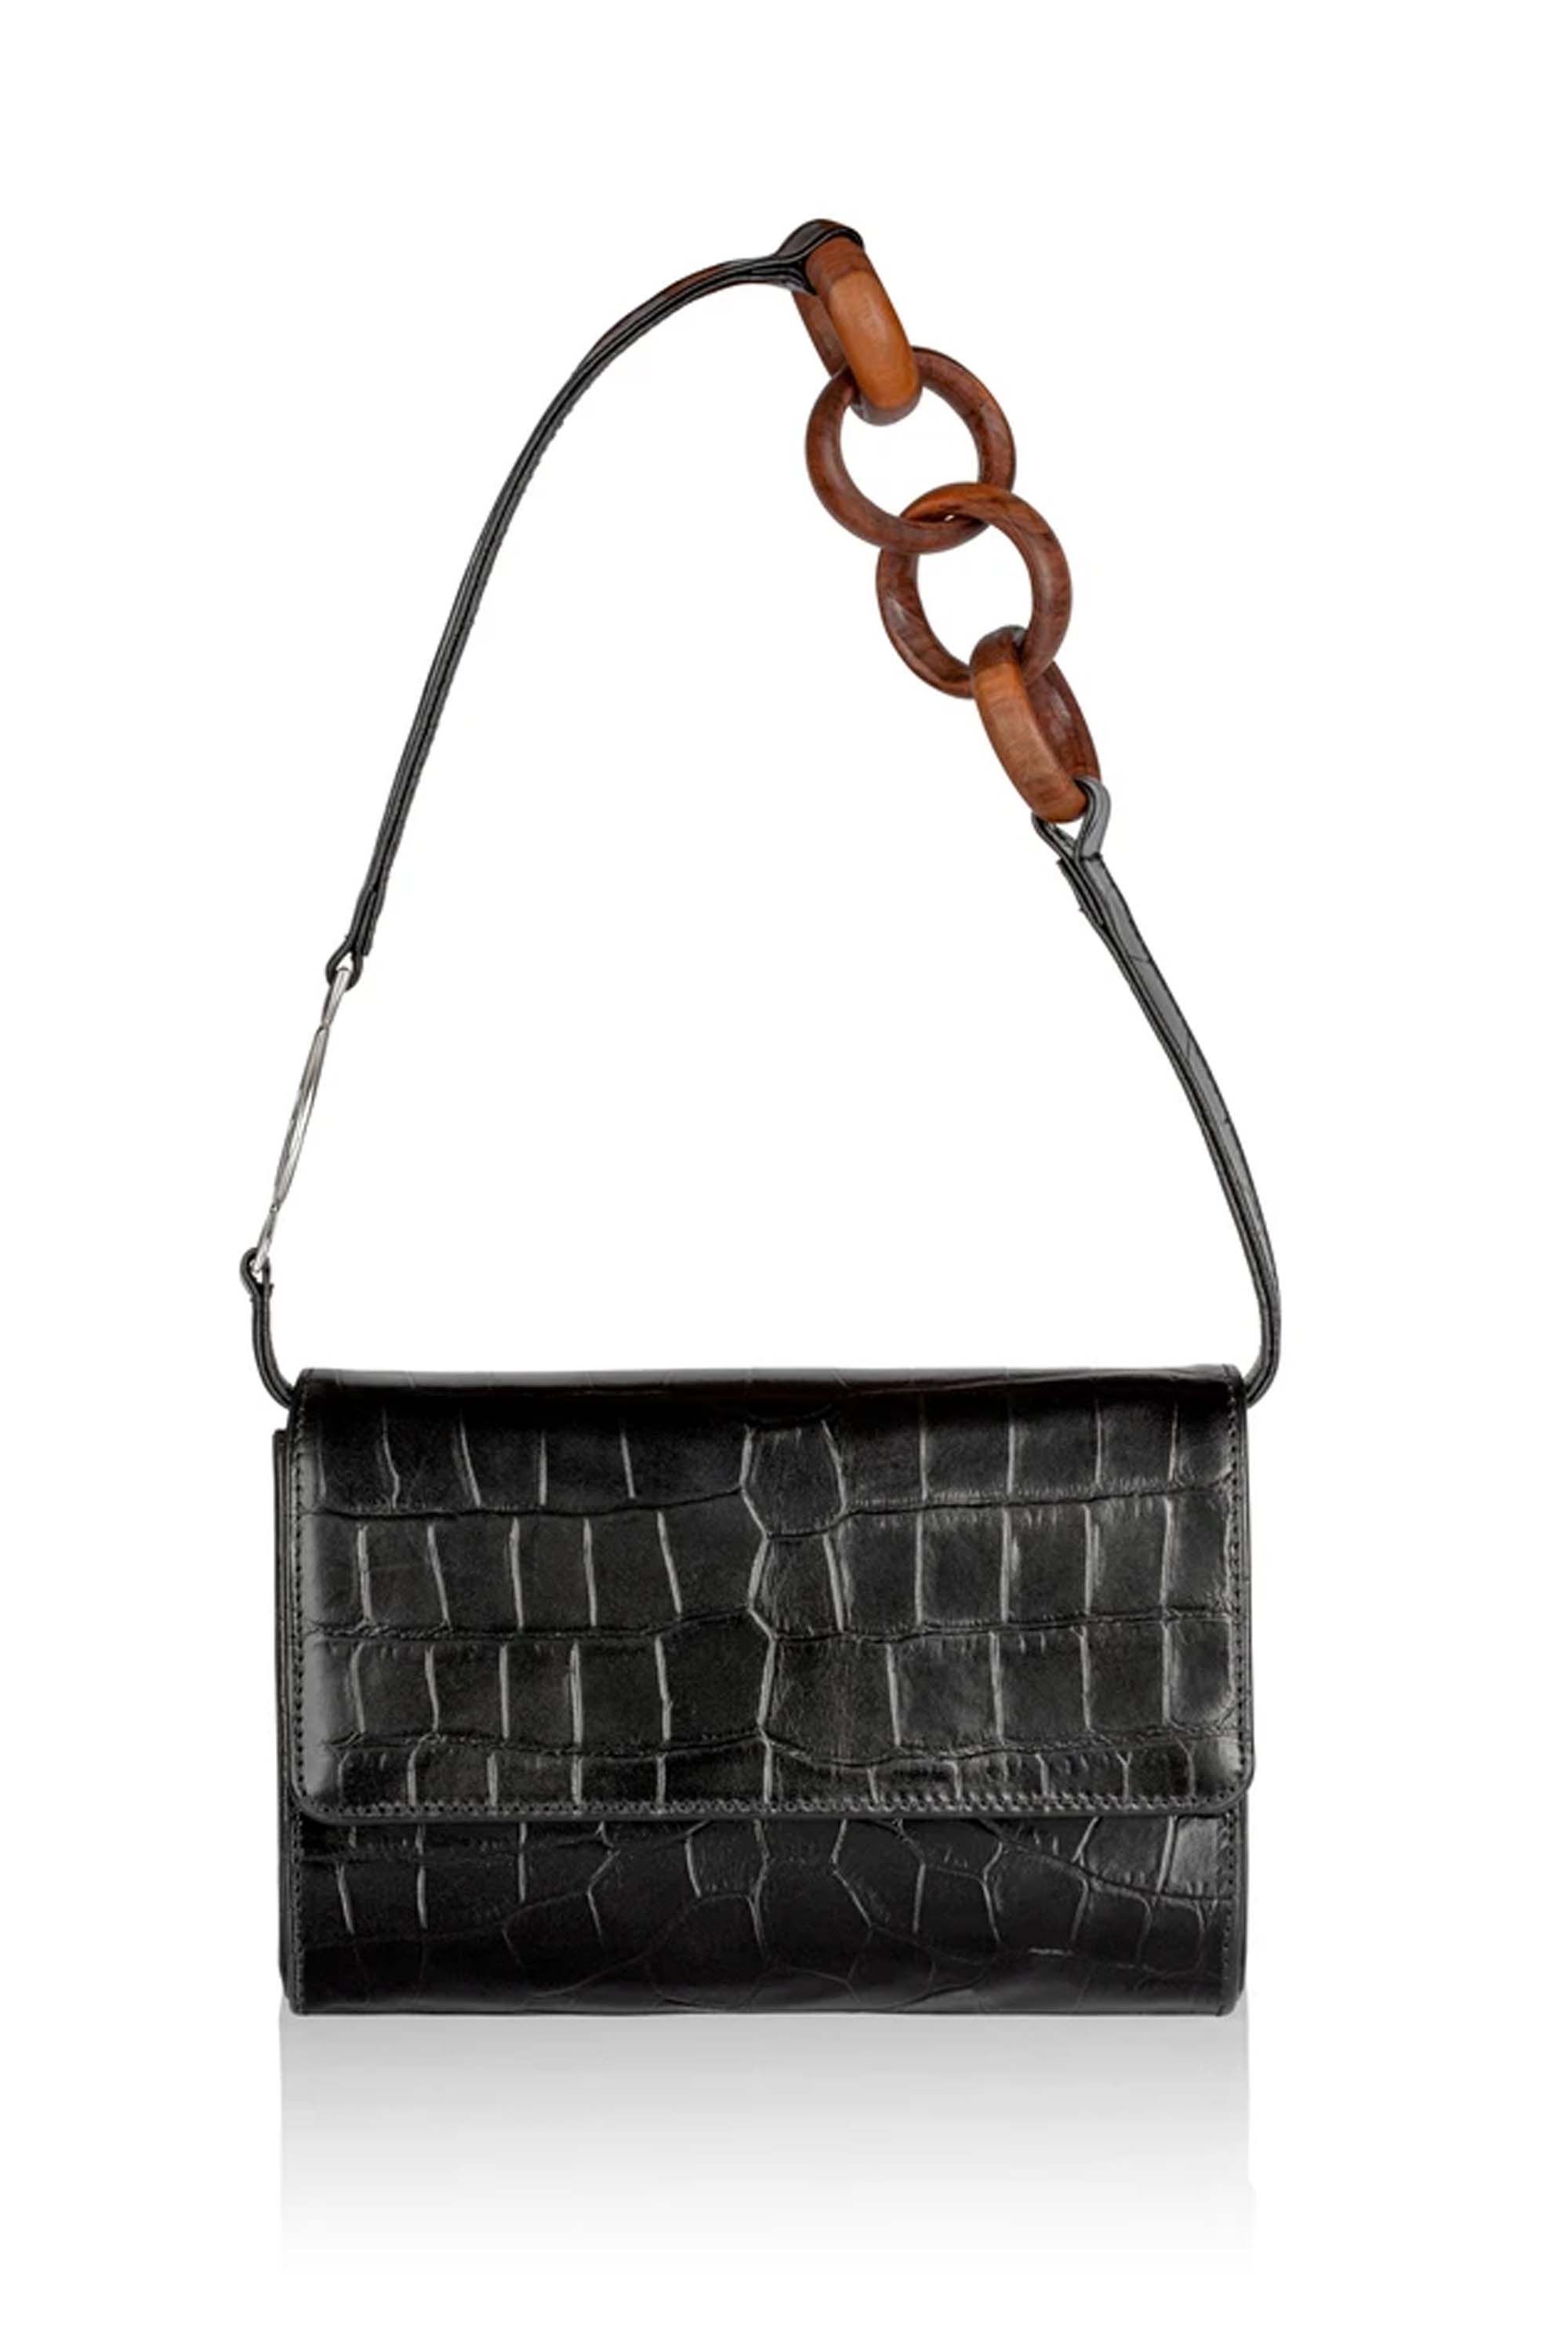 top 10 designer handbags